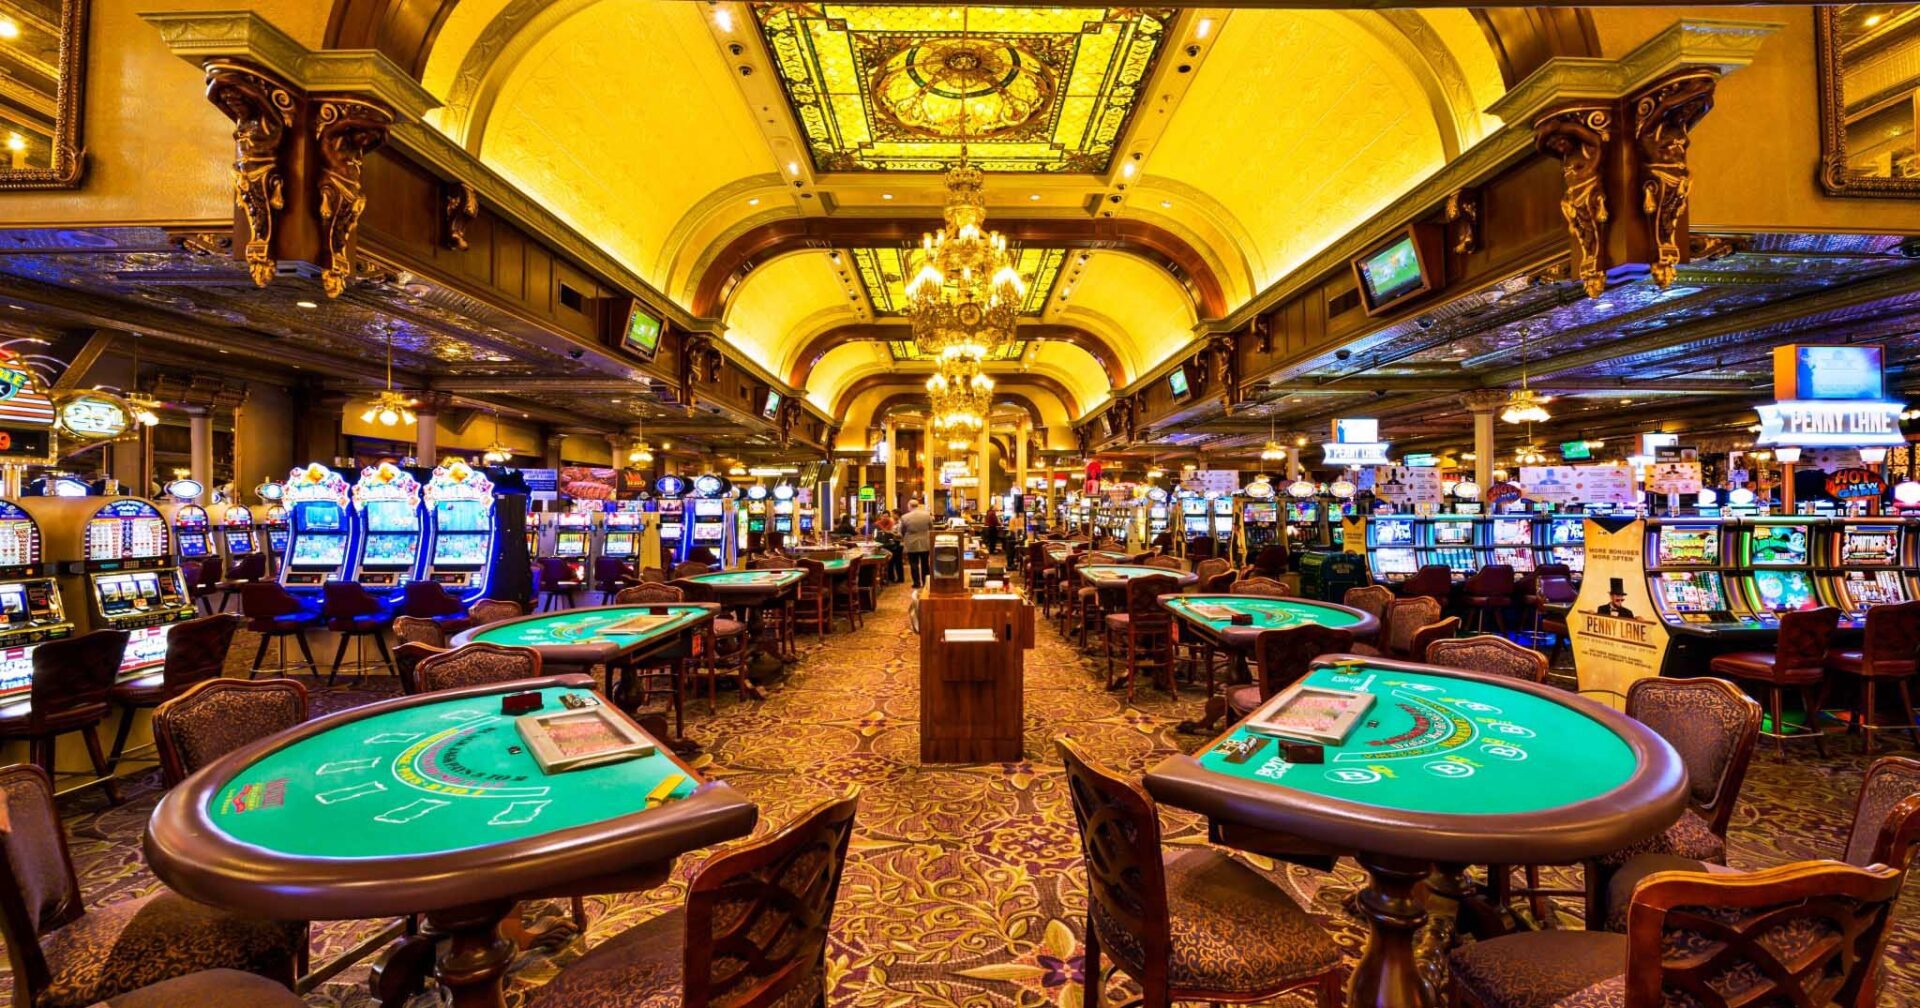 Main Street Station casino interior Las Vegas hotels